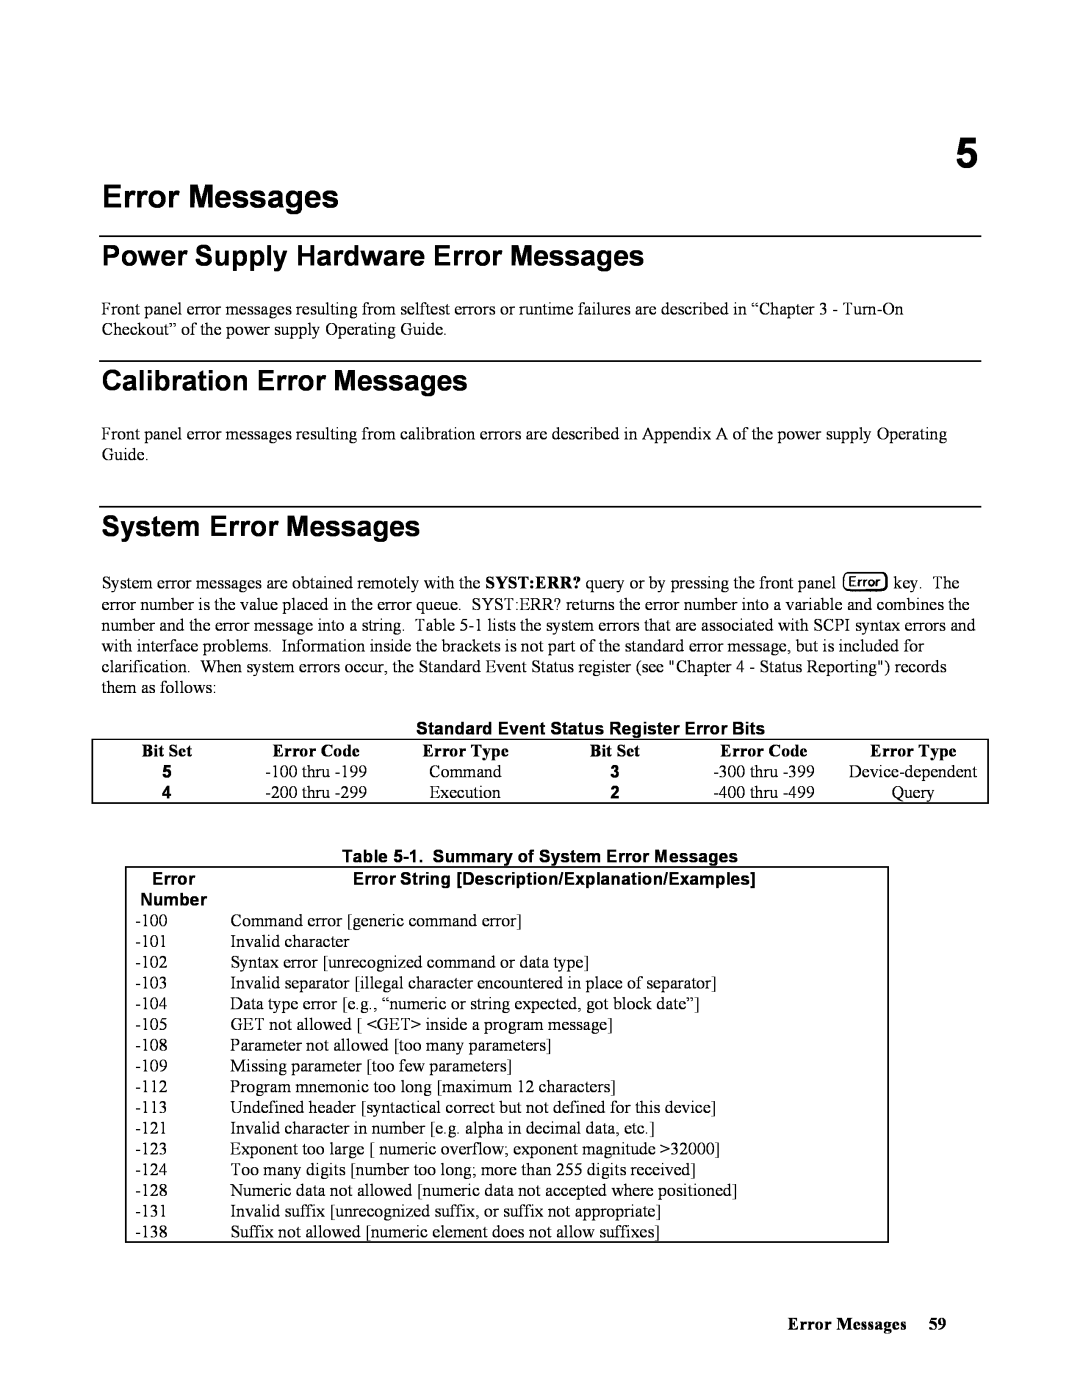 Agilent Technologies 664xA Power Supply Hardware Error Messages, Calibration Error Messages, System Error Messages 